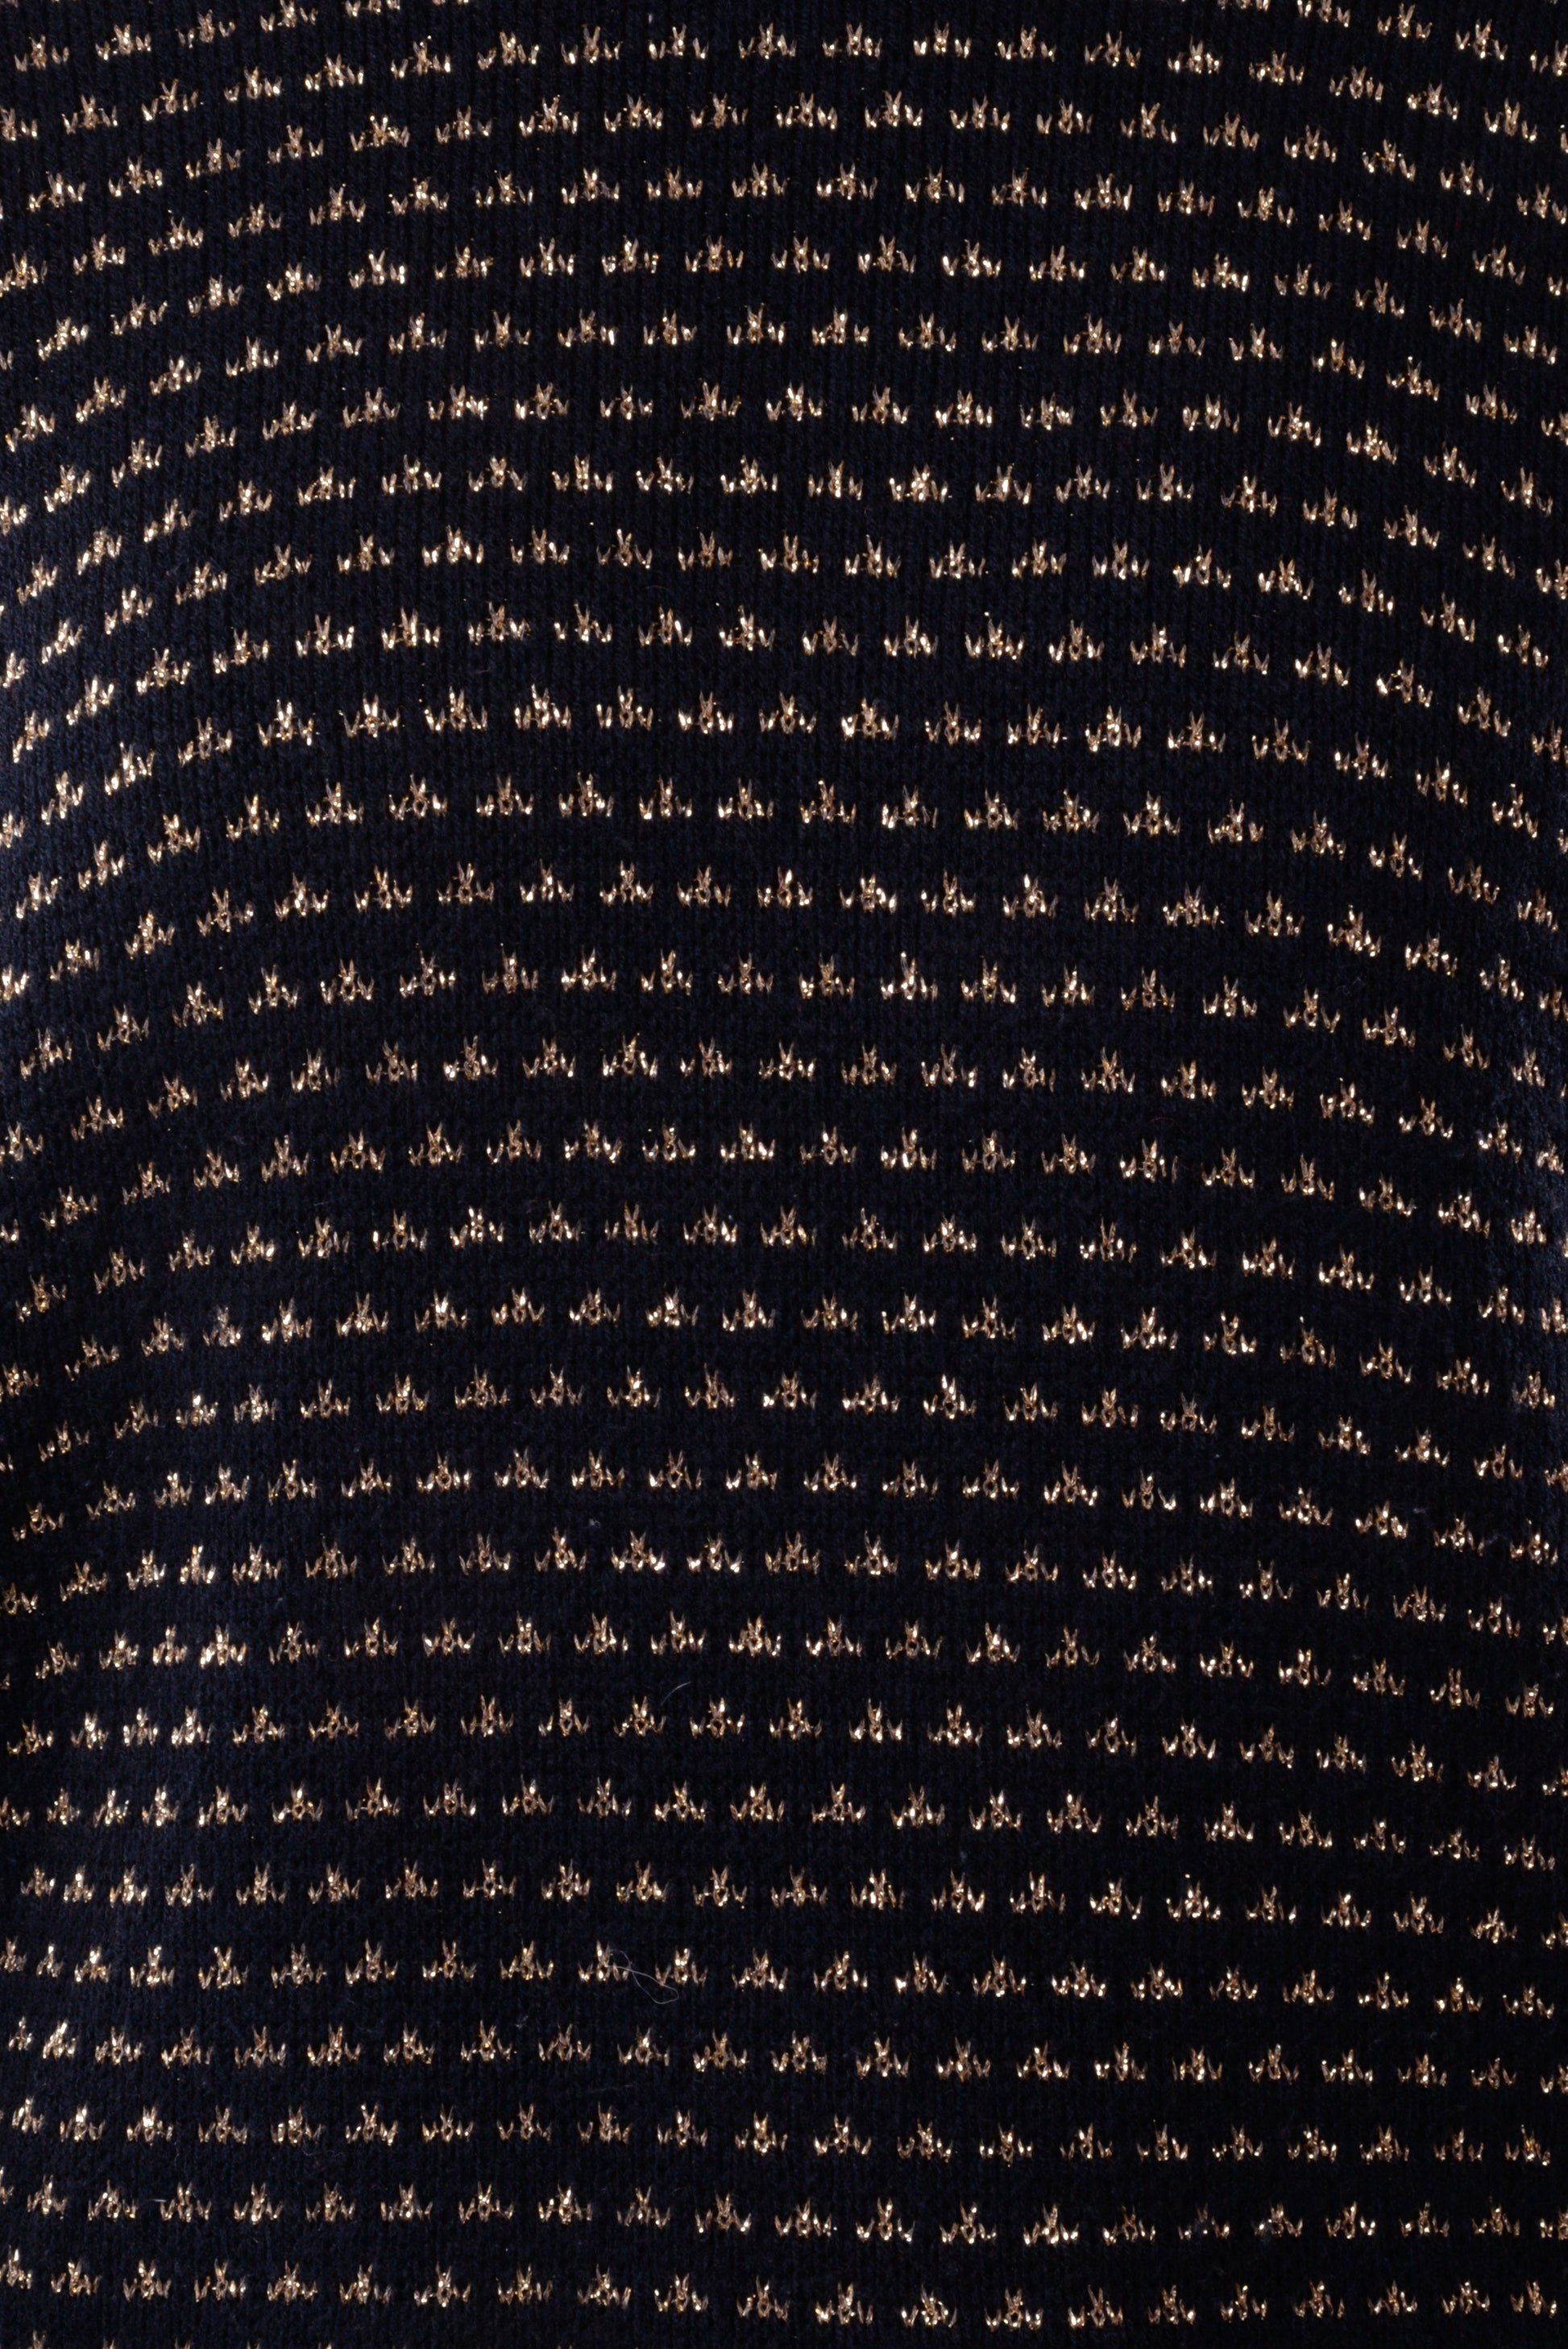 Black & Gold Polka Dot Sweater